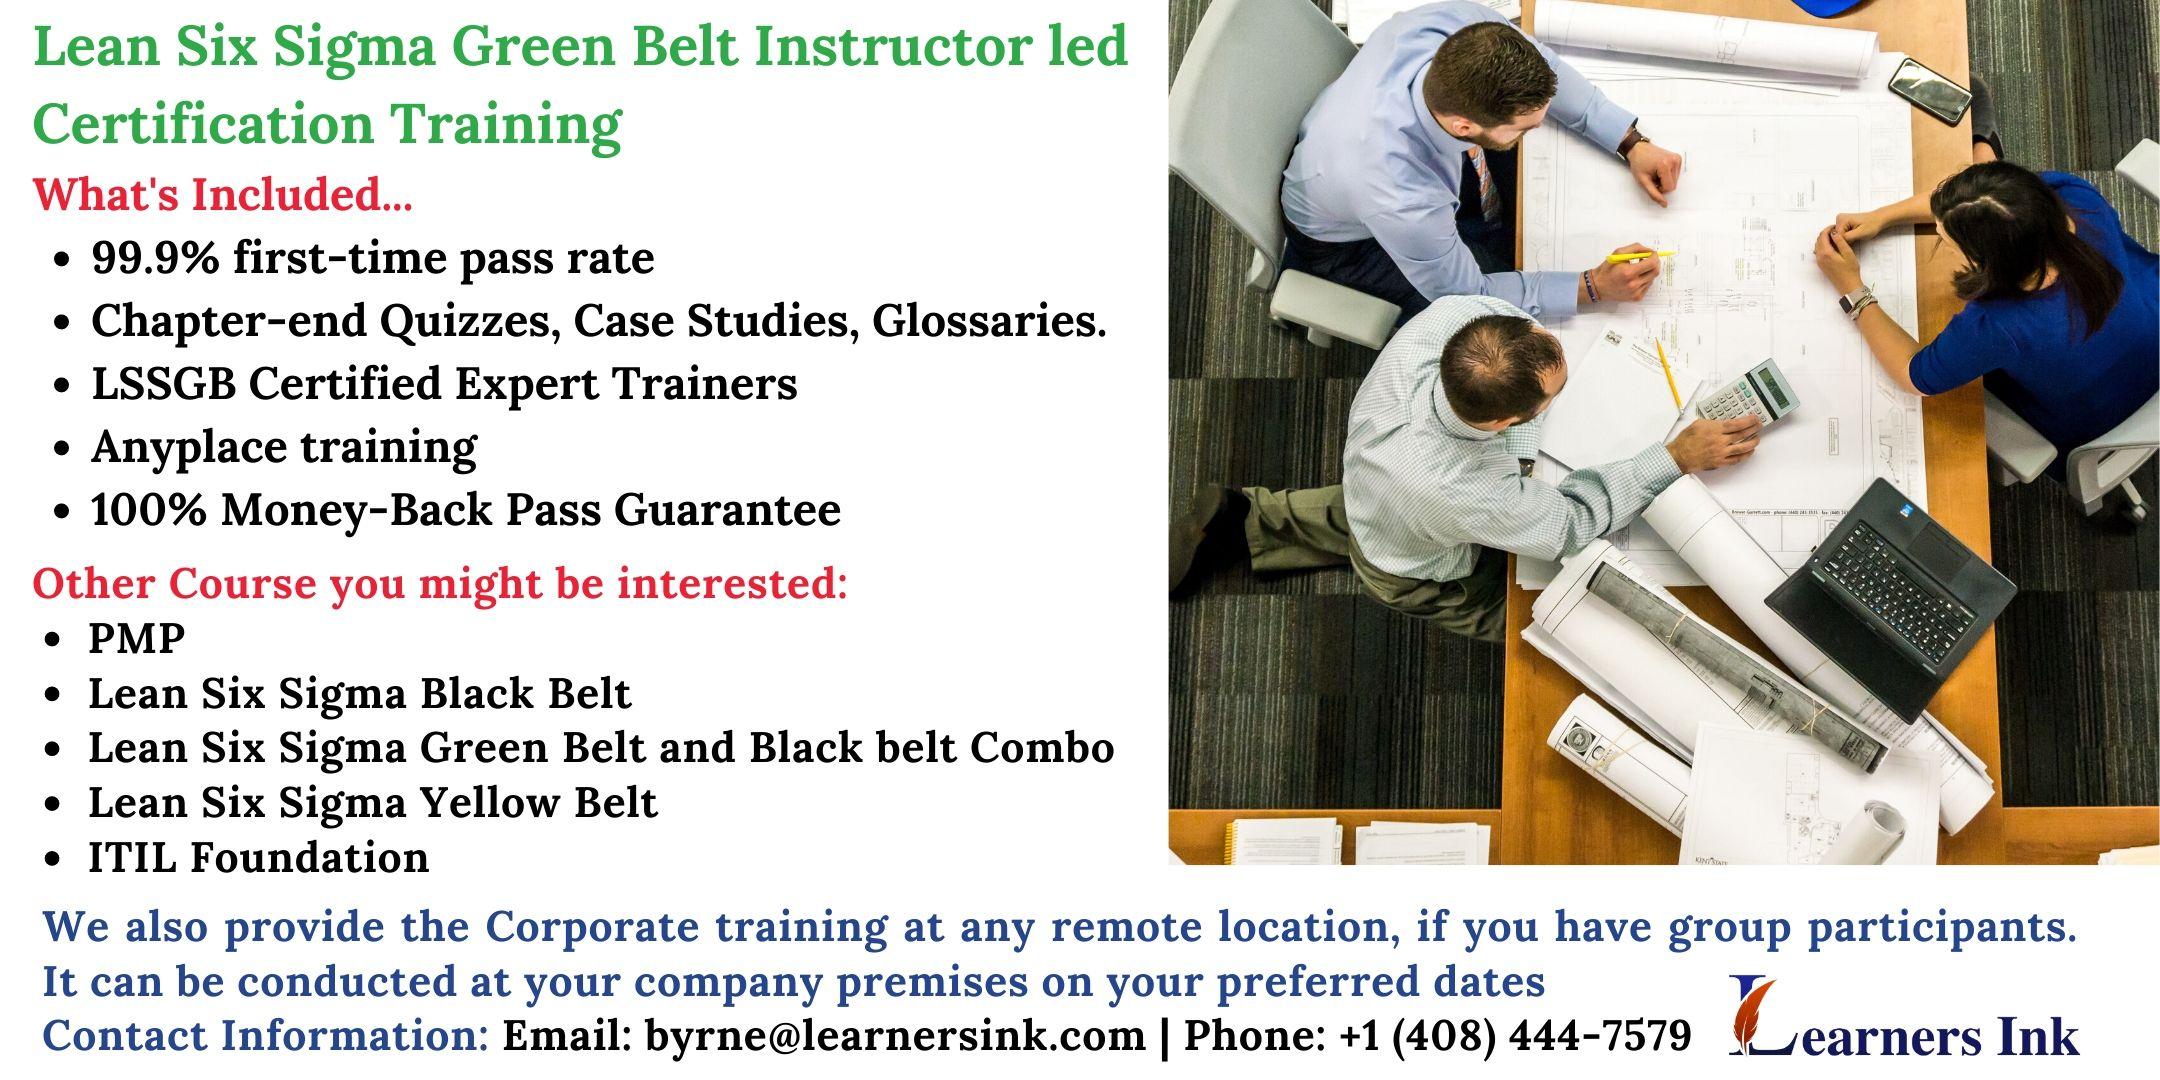 Lean Six Sigma Green Belt Certification Training Course (LSSGB) in Sunnyvale